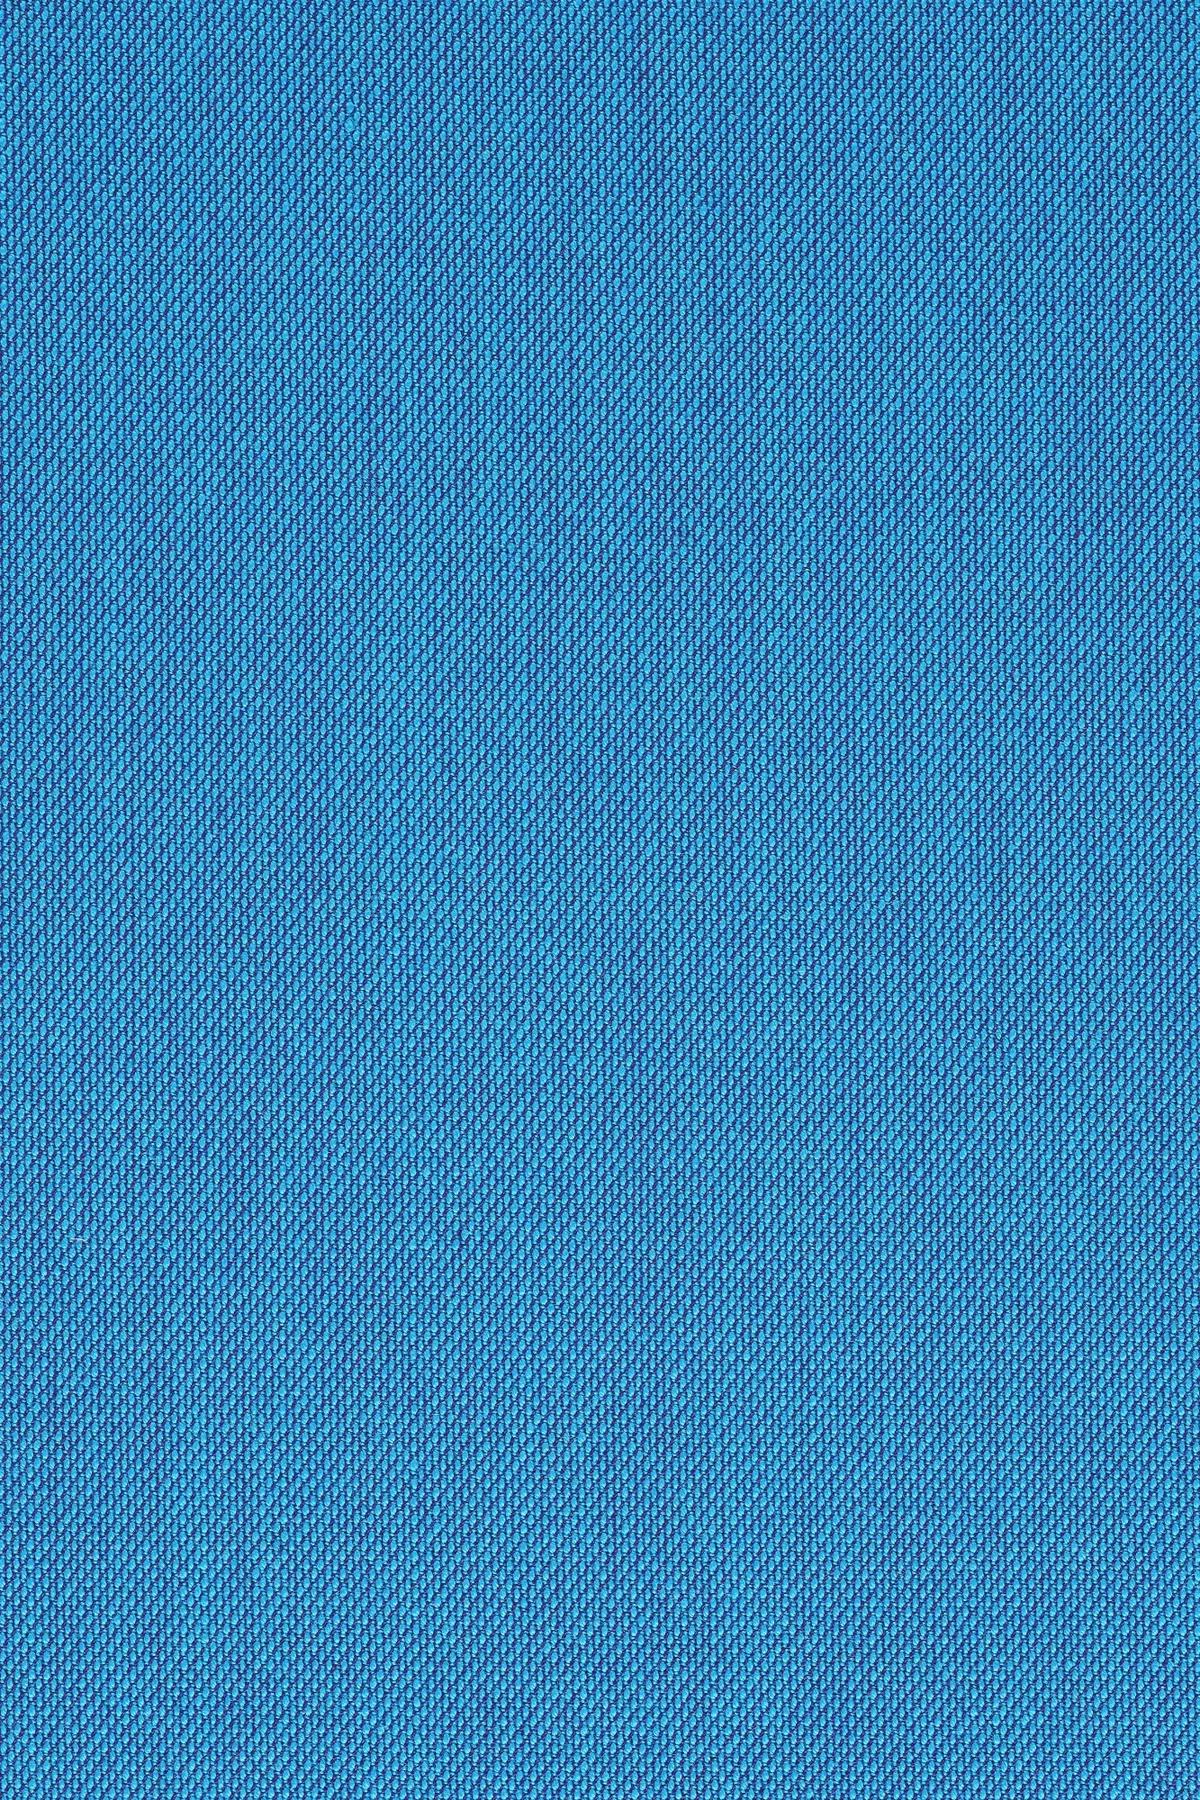 Fabric sample Steelcut Trio 3 865 blue